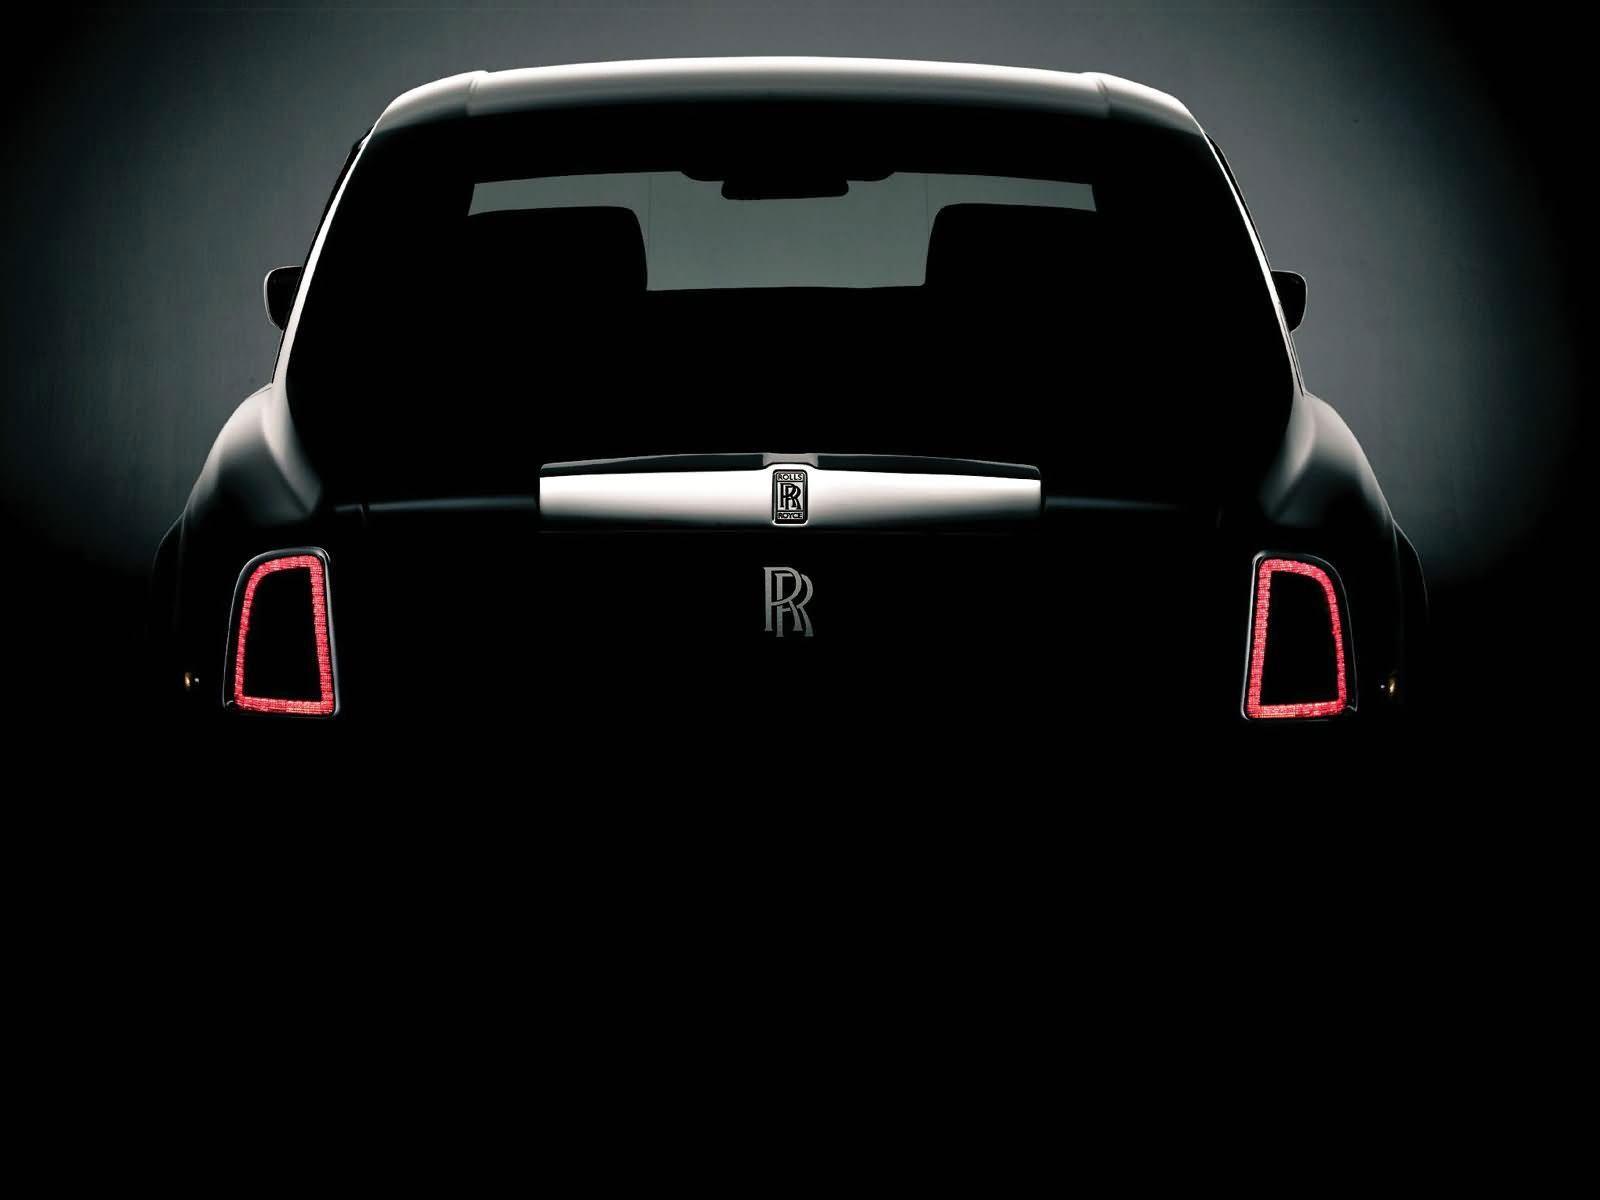 Rolls Royce Phantom Wallpaper